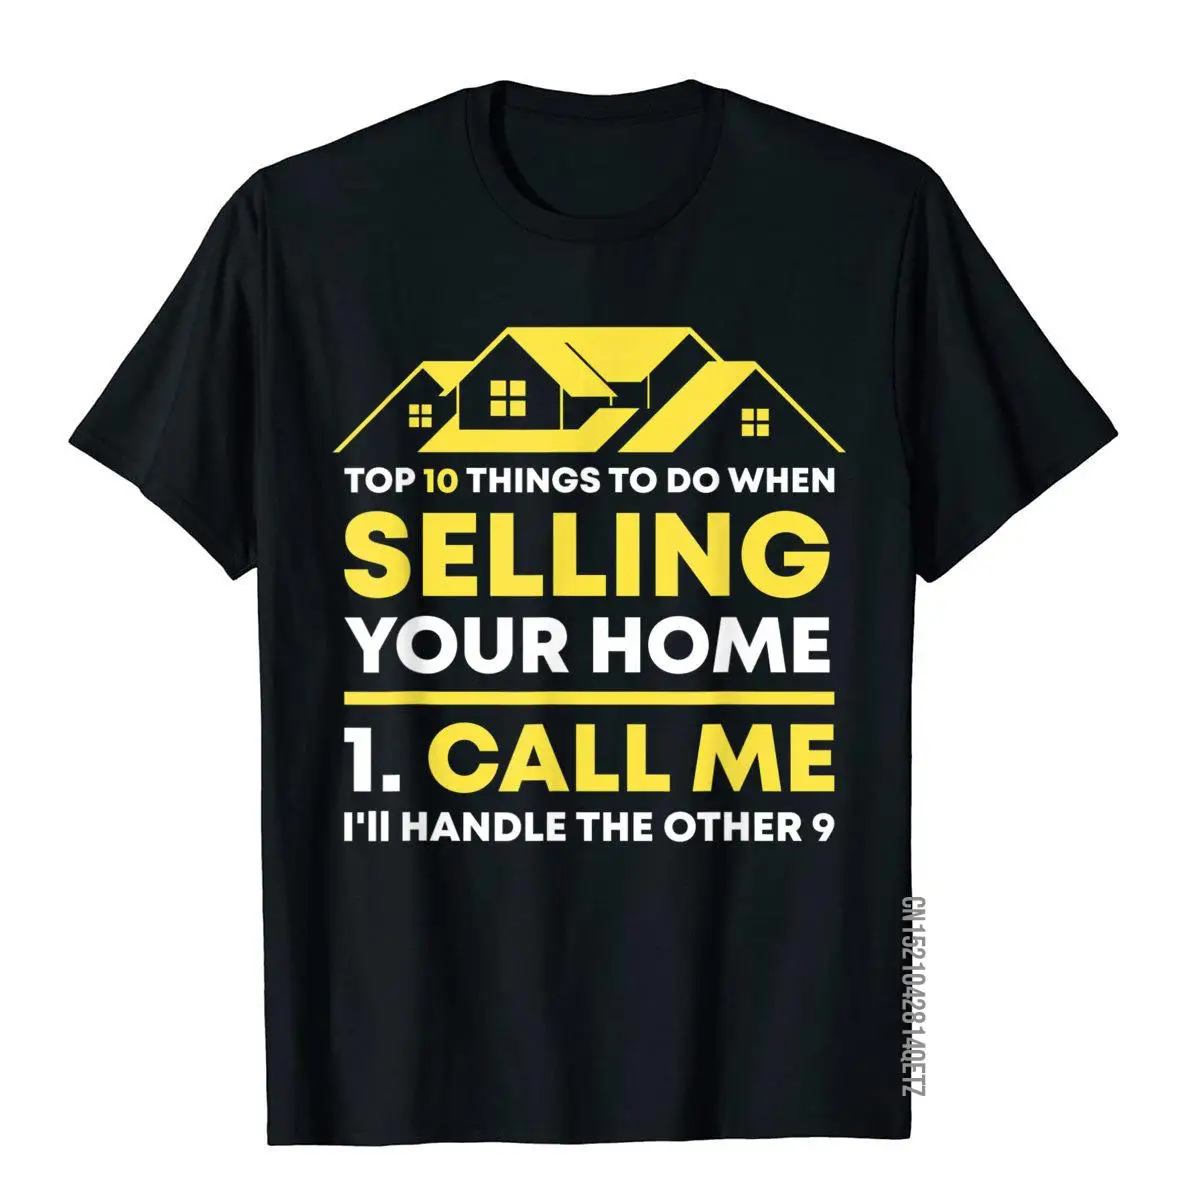 Call Me Real Estate Agent Gift Funny Realtor Investor Broker T-Shirt Faddish Men T Shirts Cotton Tees Slim Fit